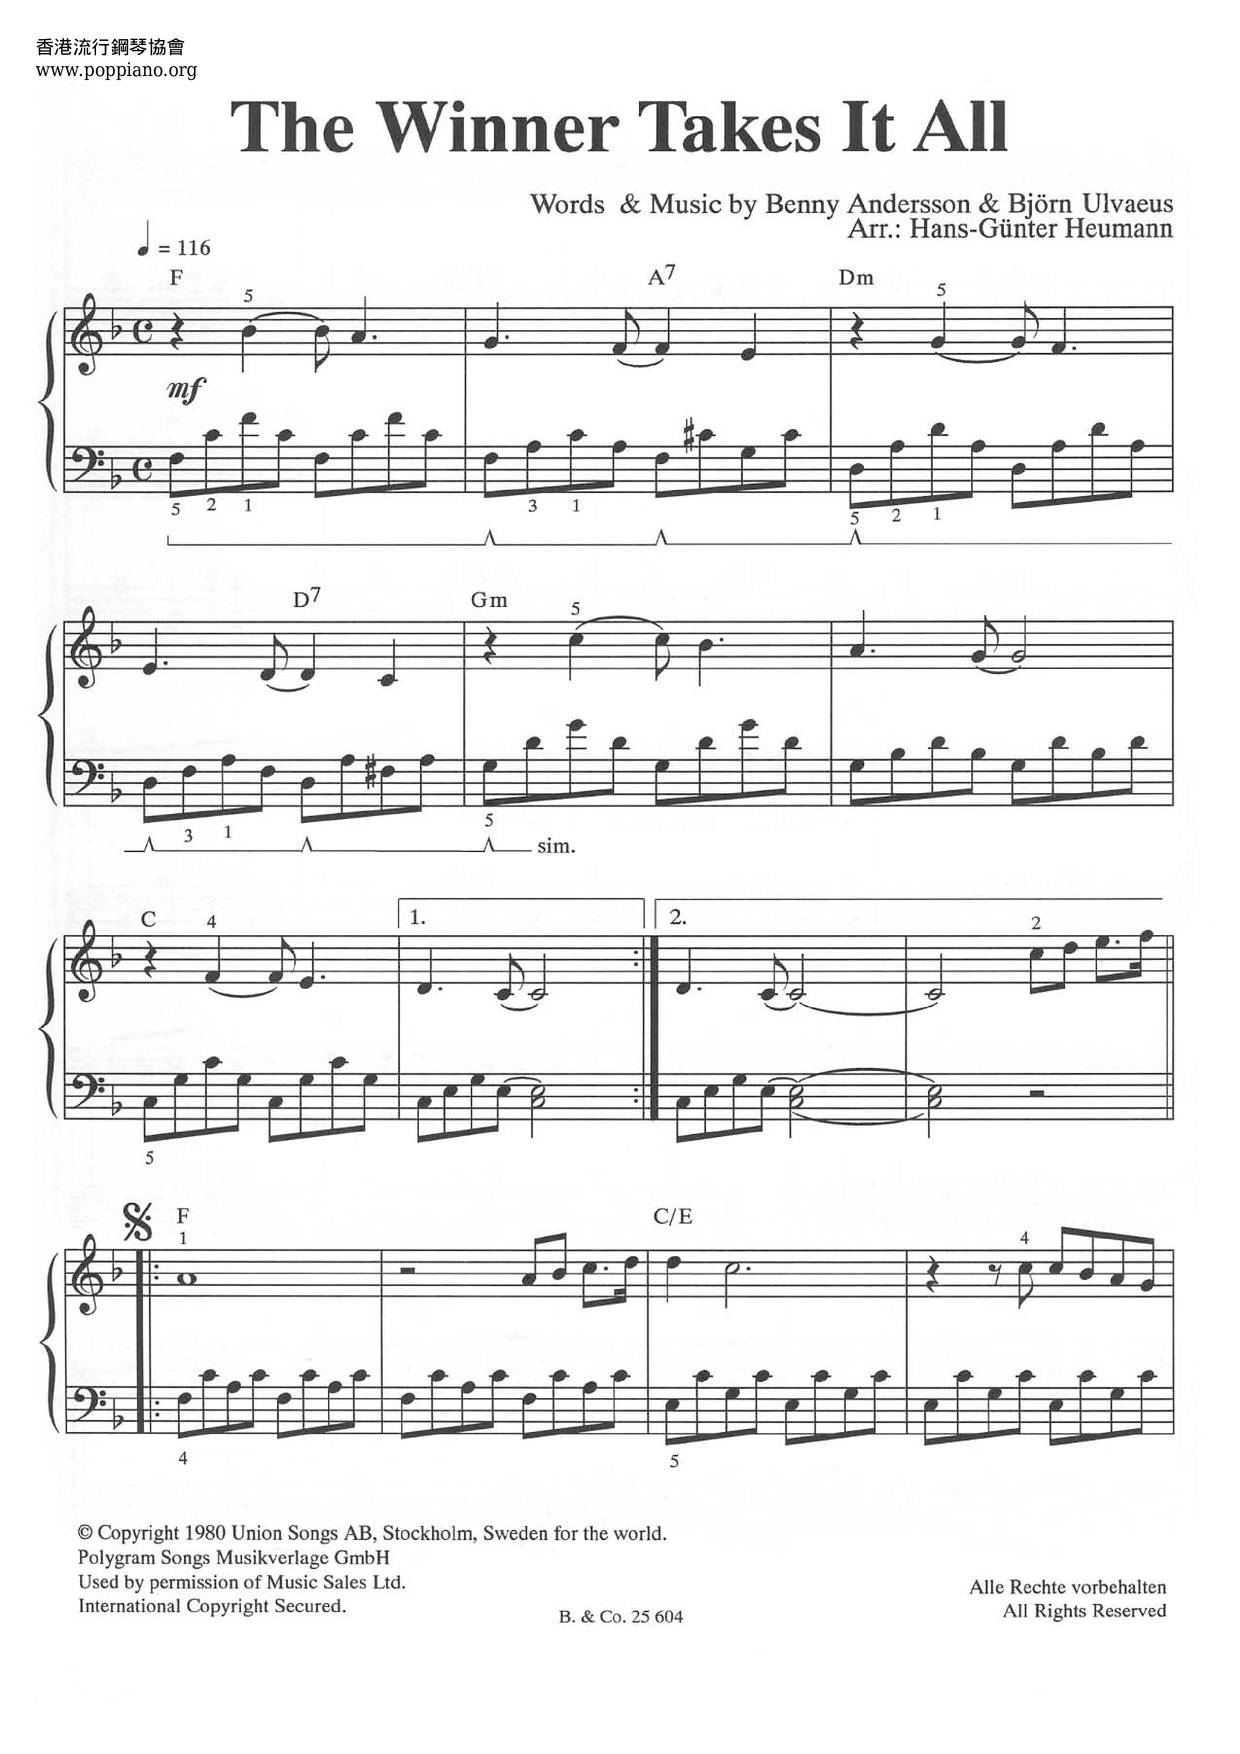 ABBA-The Winner Takes It All Sheet Music pdf, - Free Score Download ★